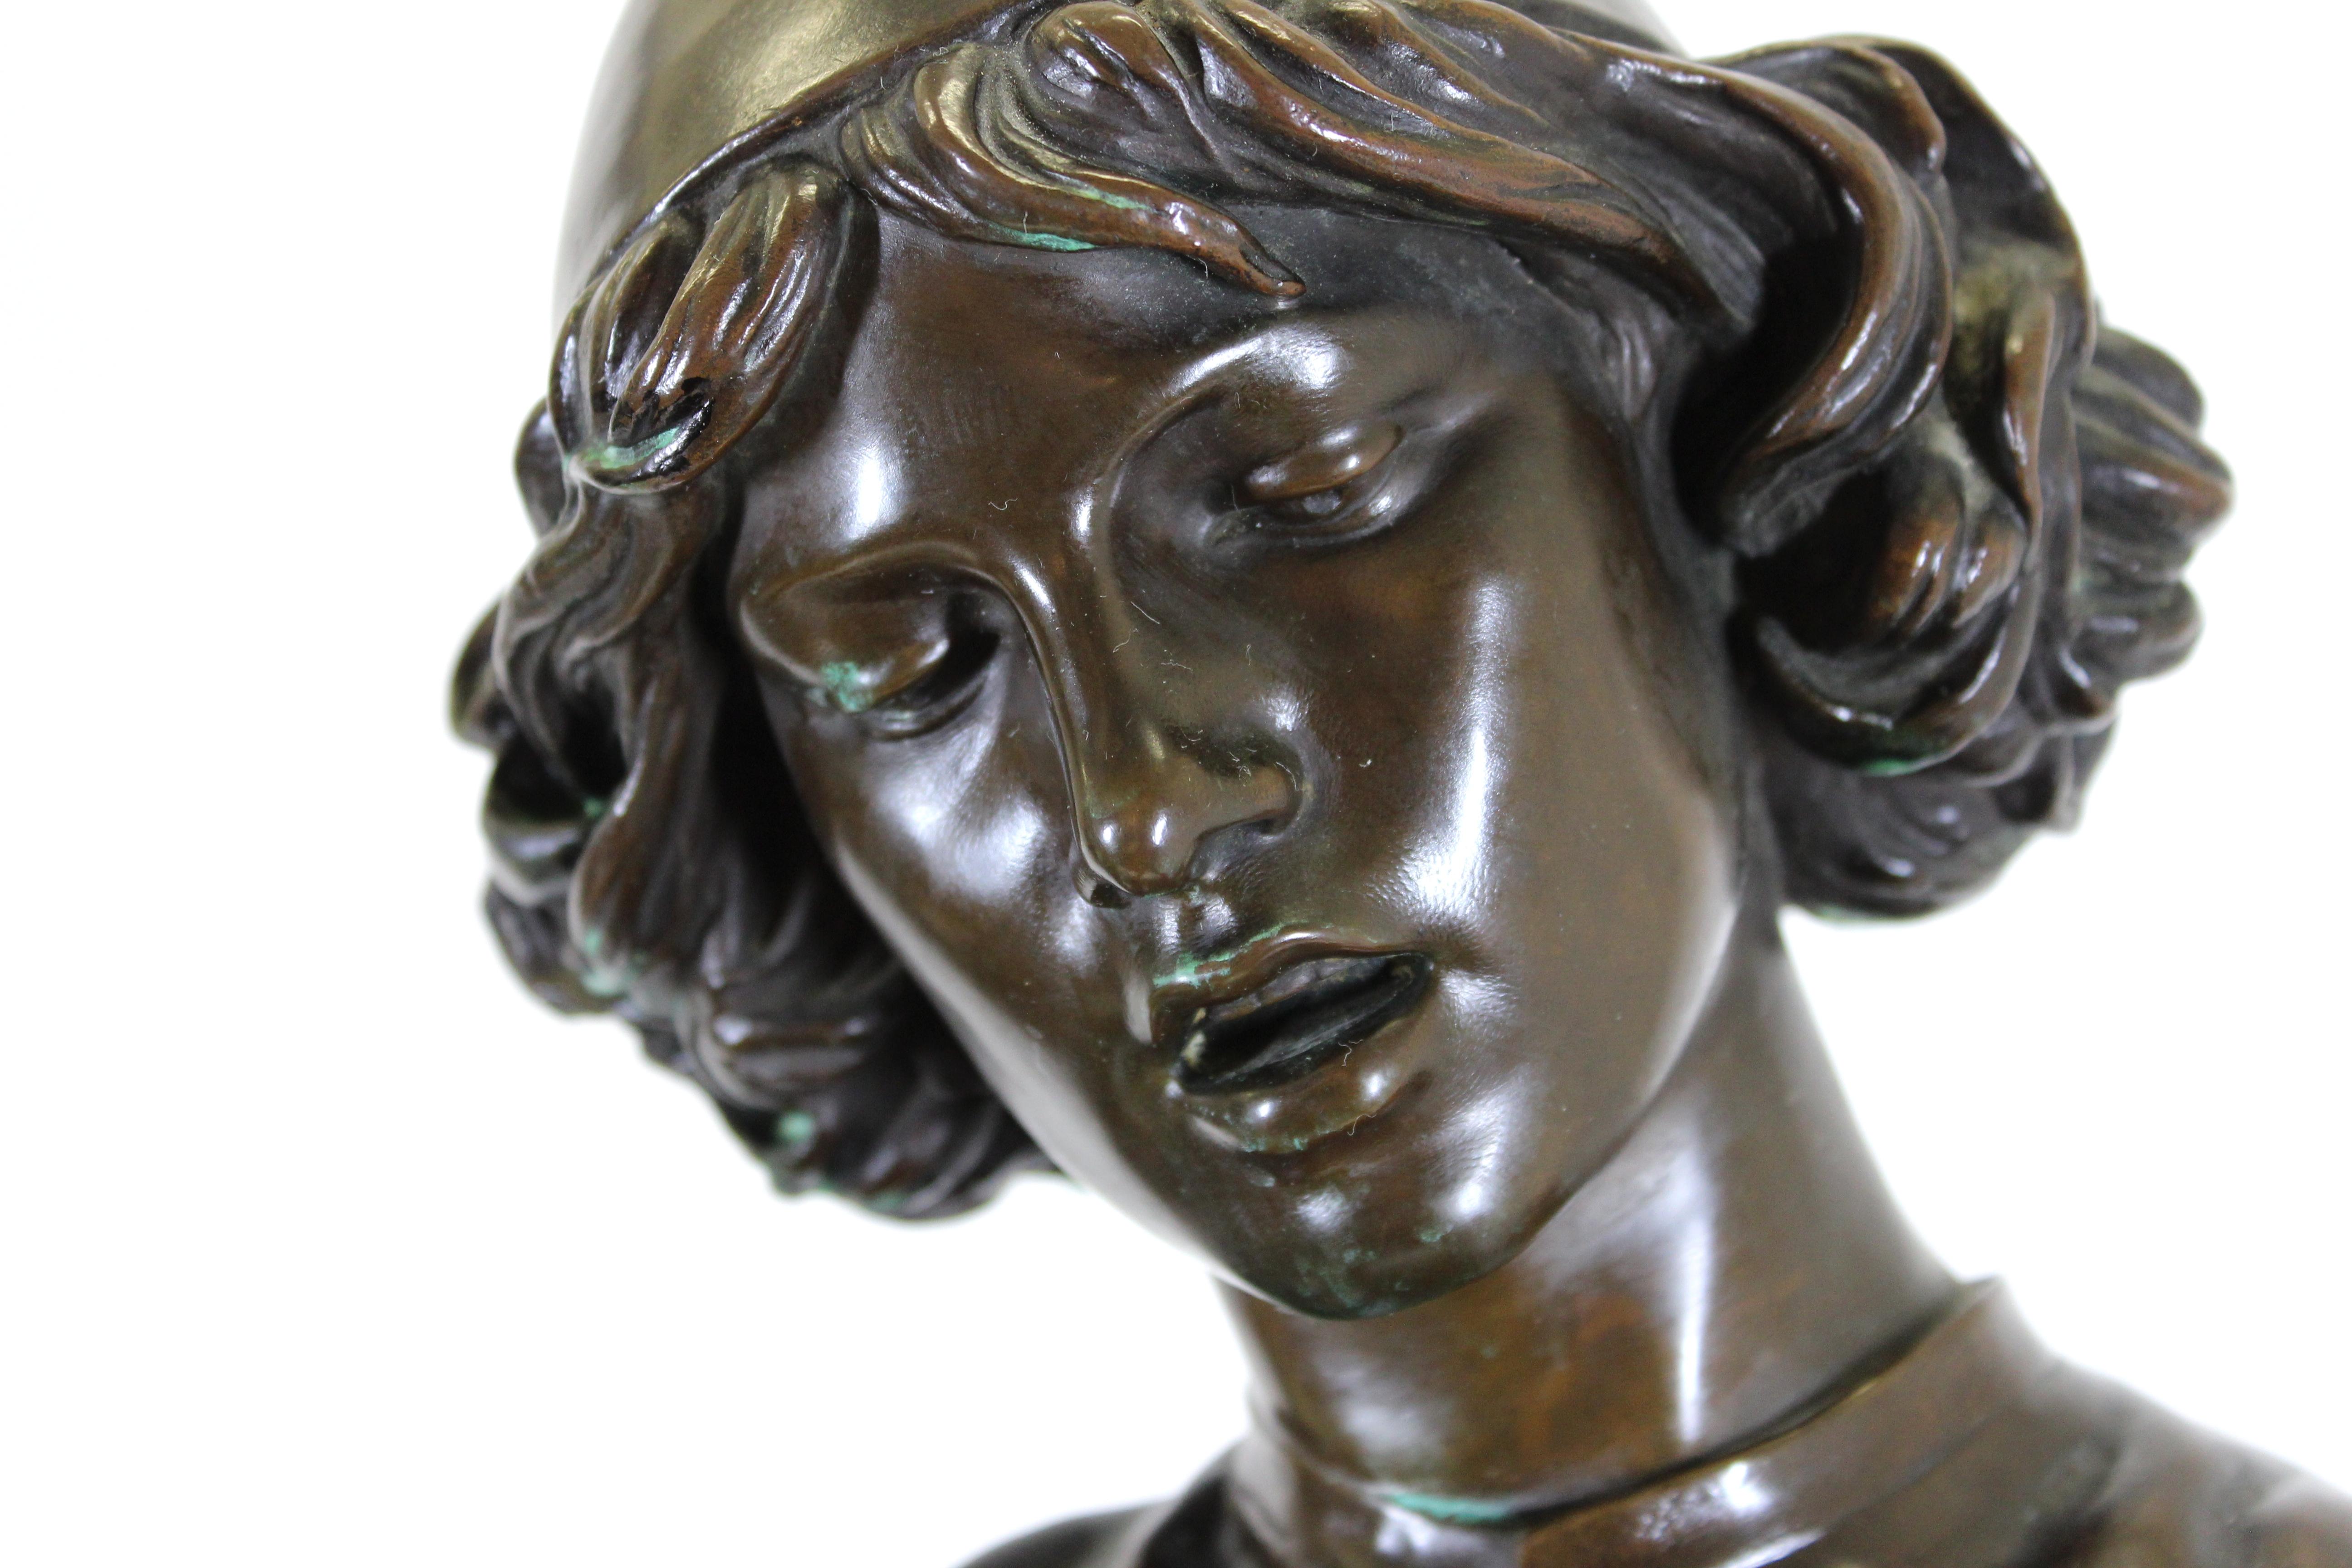 19th Century P. Dubois & Barbedienne 'Florentine Singer' French Romantic Period Cast Bronze